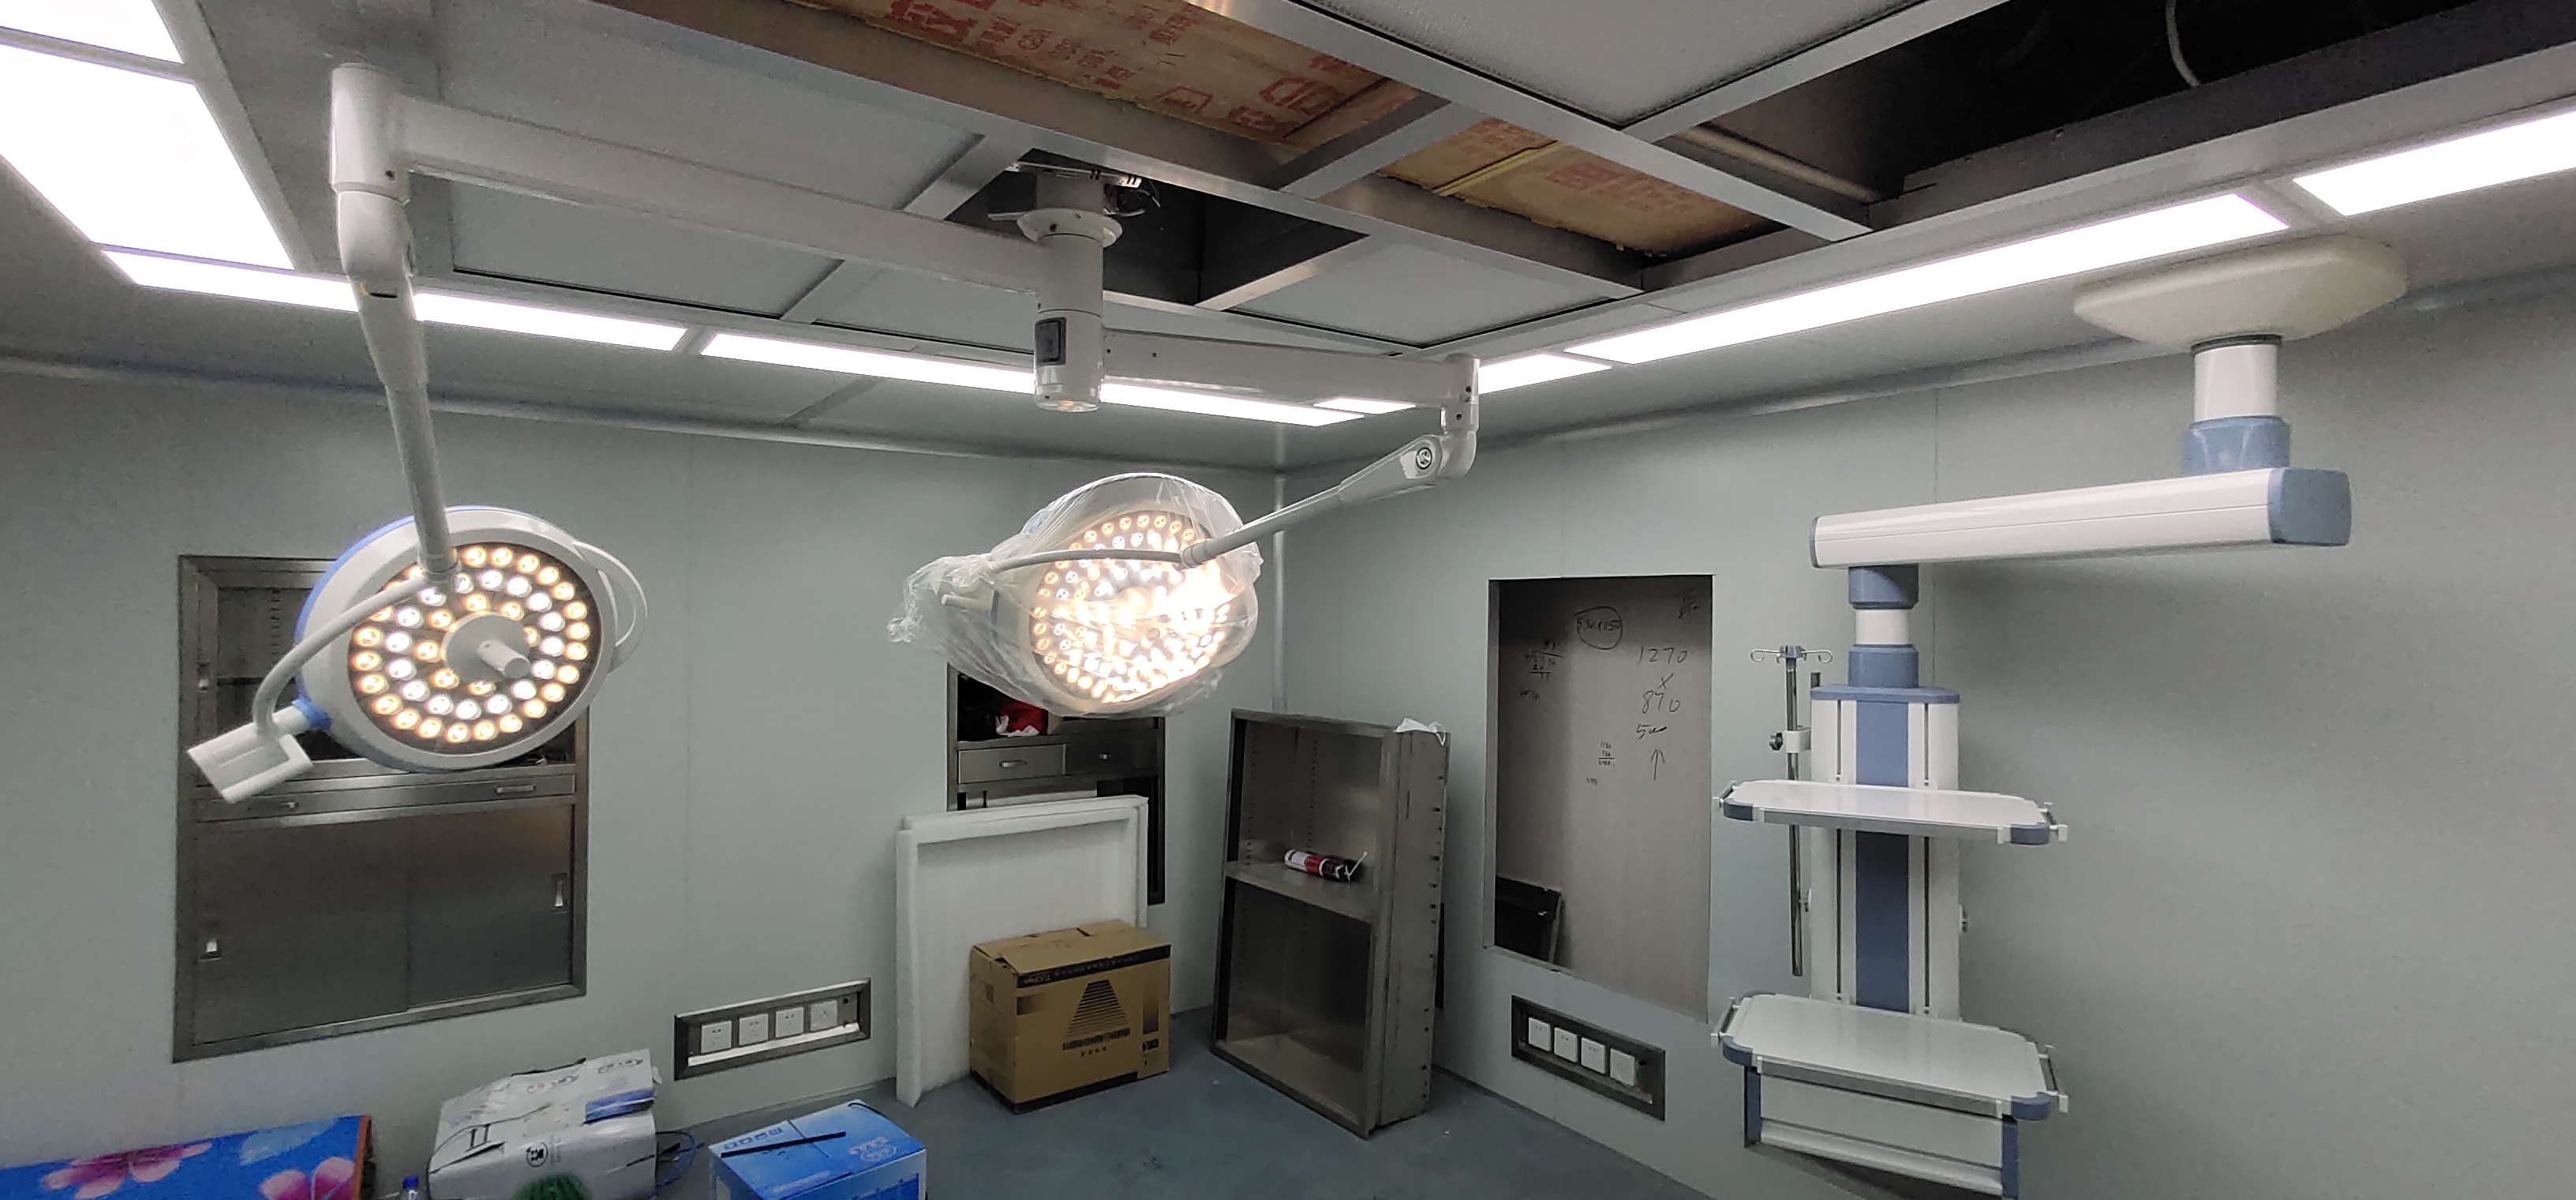 LED卤素灯整形手术灯厂家质量保证